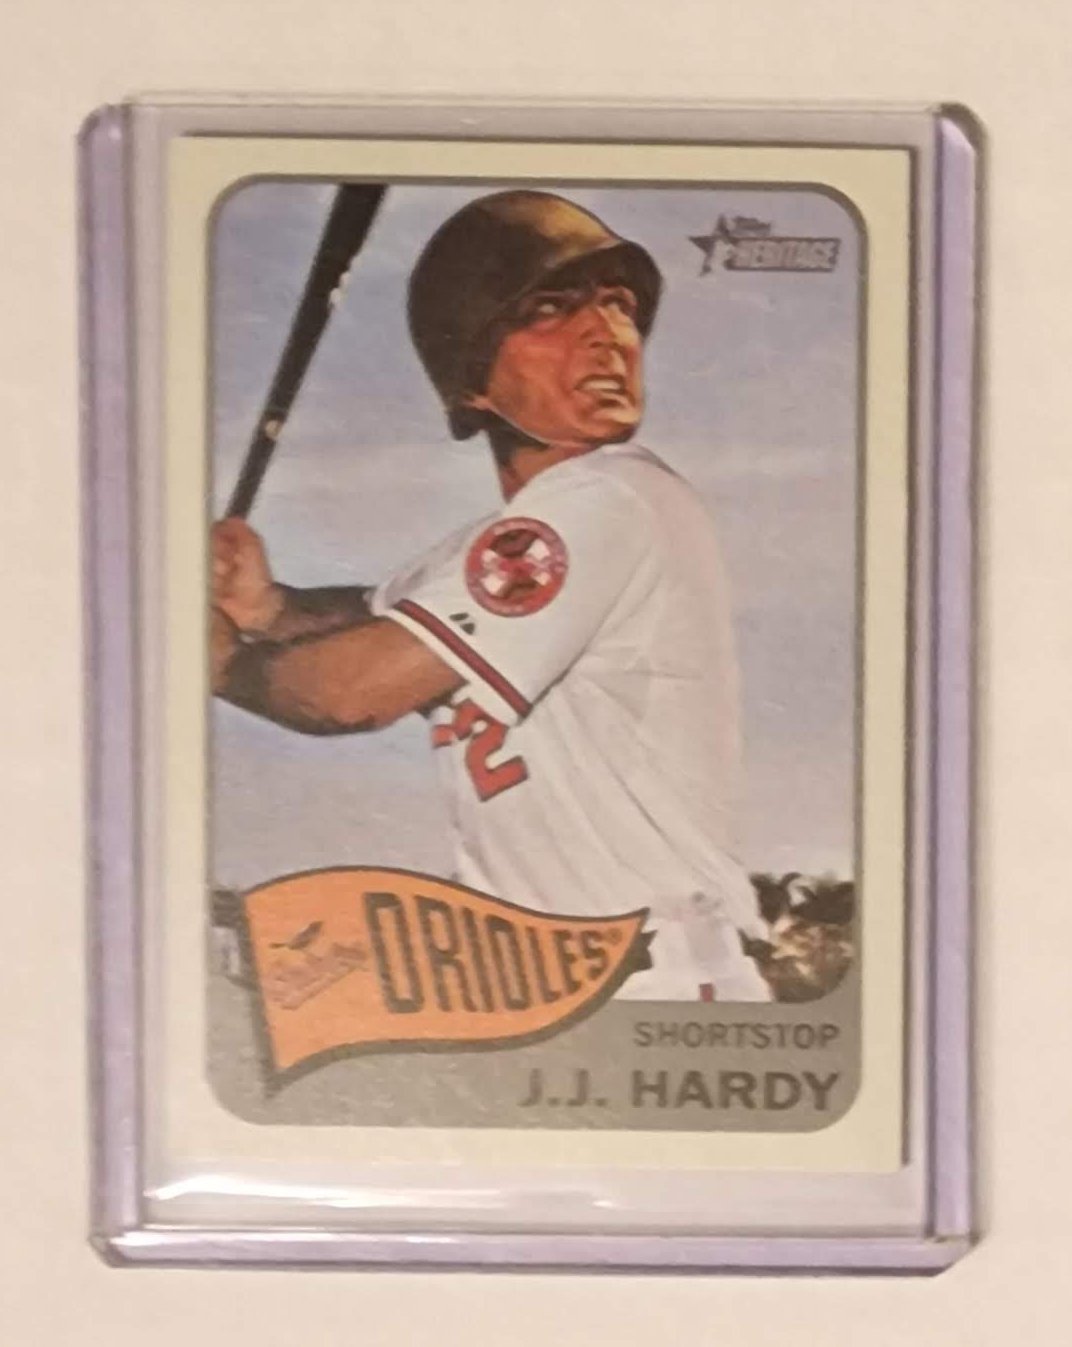 JJ Hardy WW2 Soldier Orioles Original Collage Baseball Card Art by